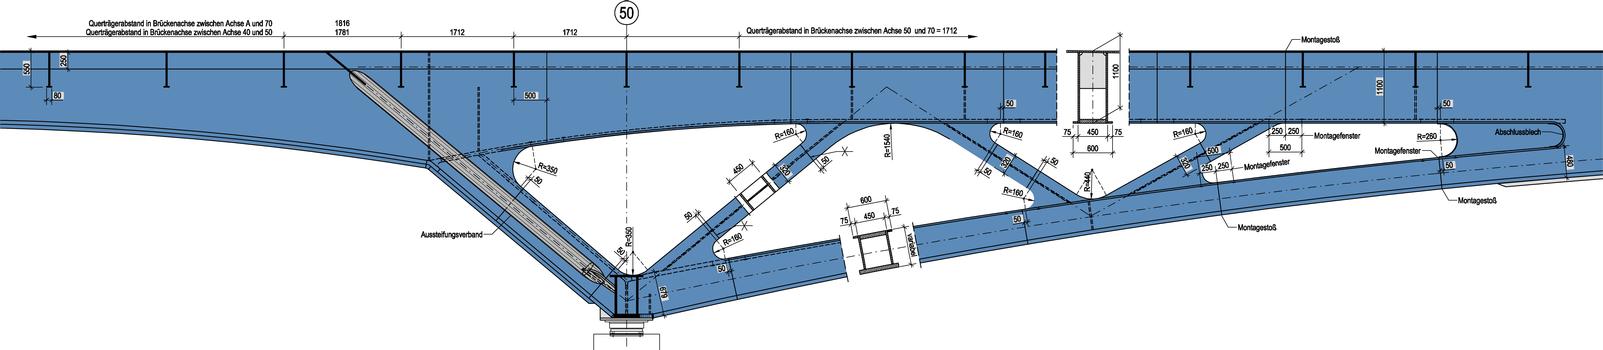 Binnenhafen Viaduct for Hamburg elevated transit systemLongitudinal section - Axis 50